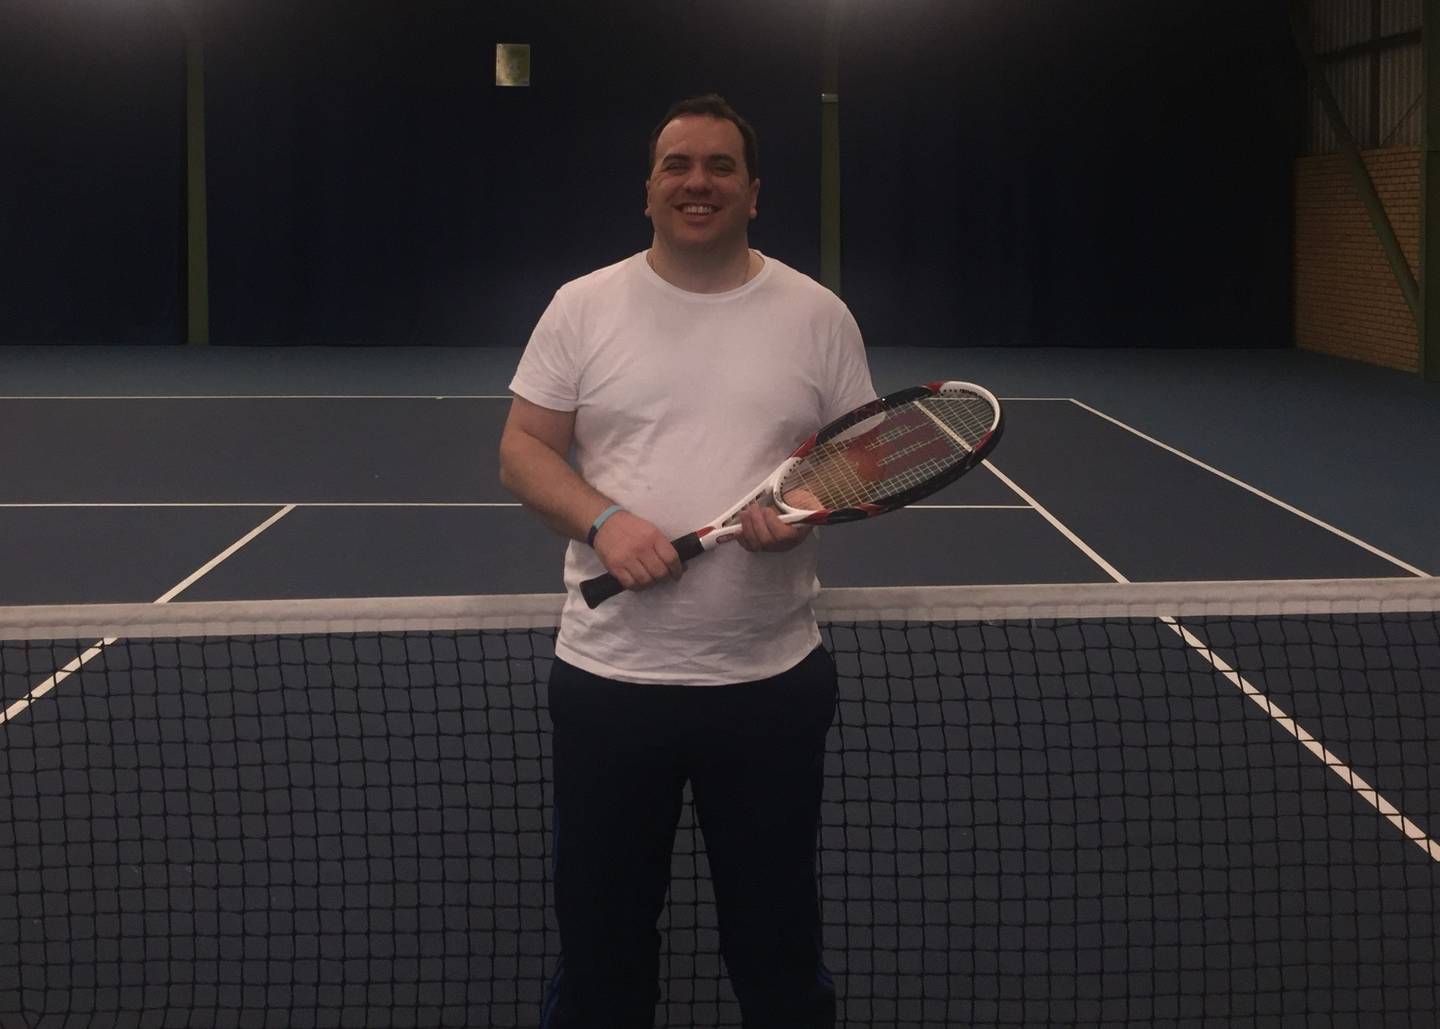 Matt standing by tennis net smiling to camera